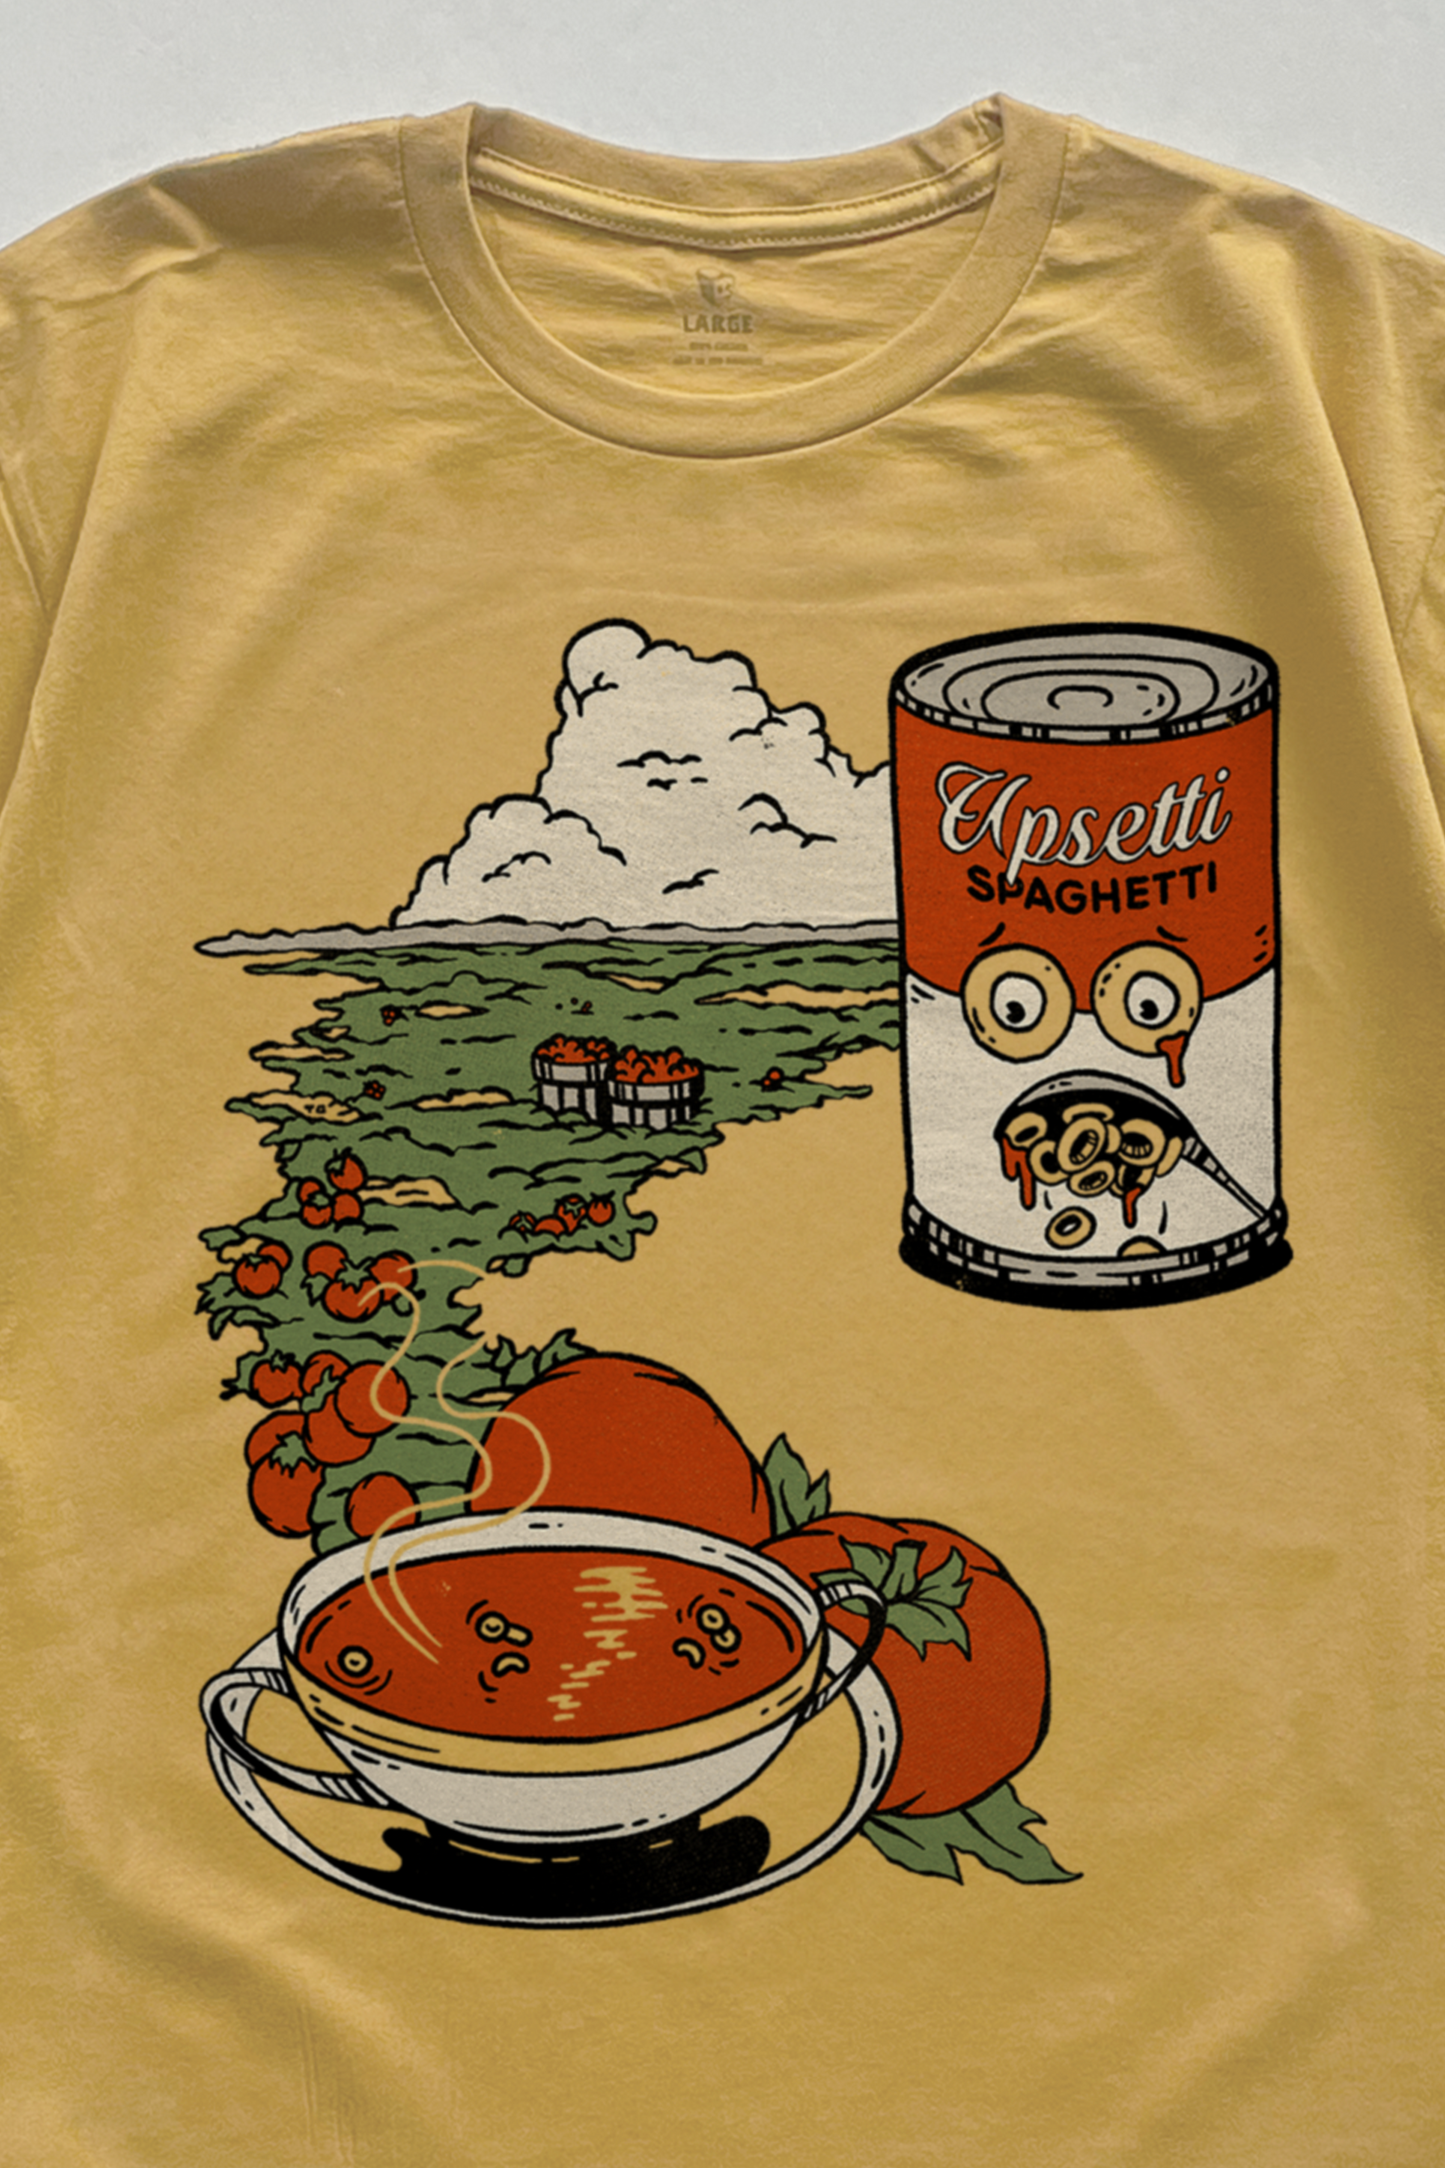 Upsetti Spaghetti T-shirt